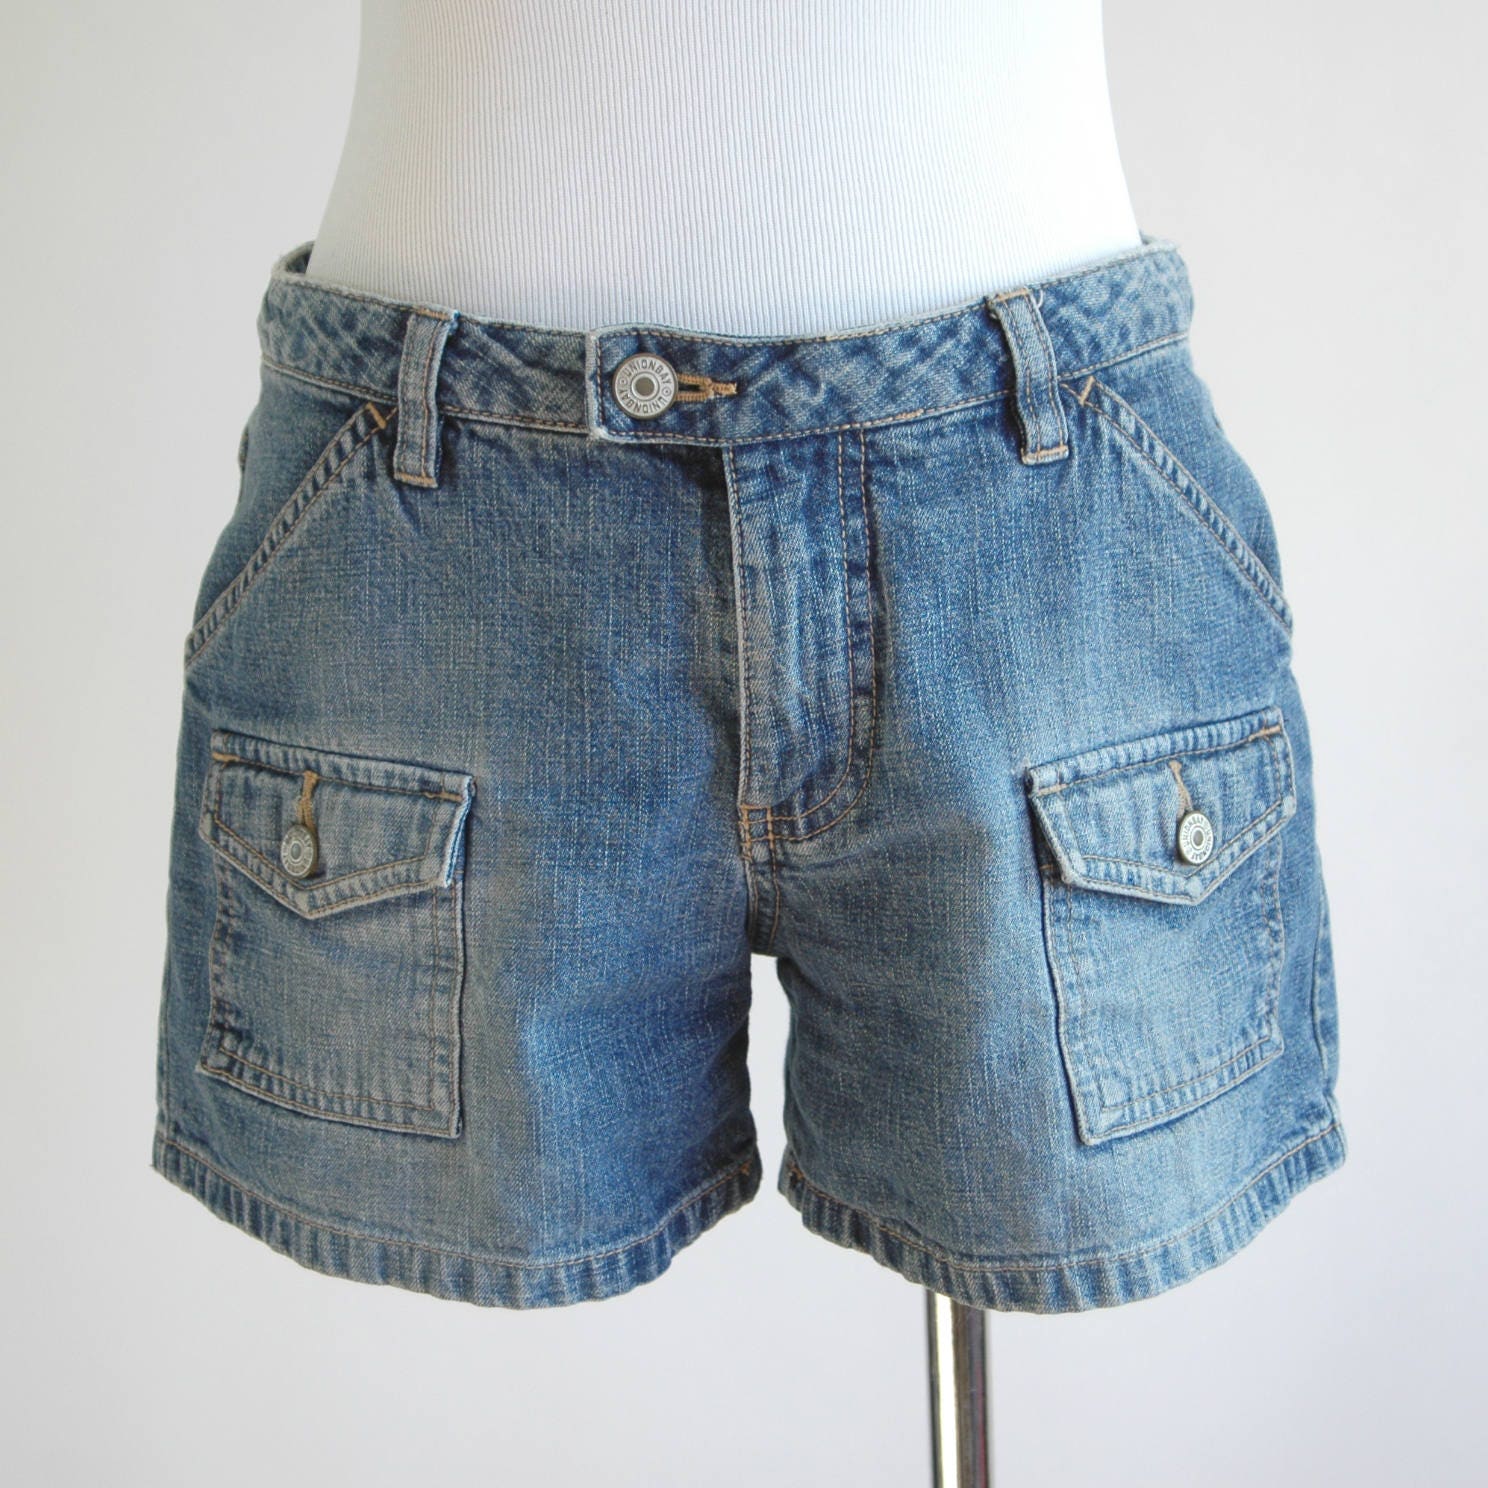 medium length jean shorts